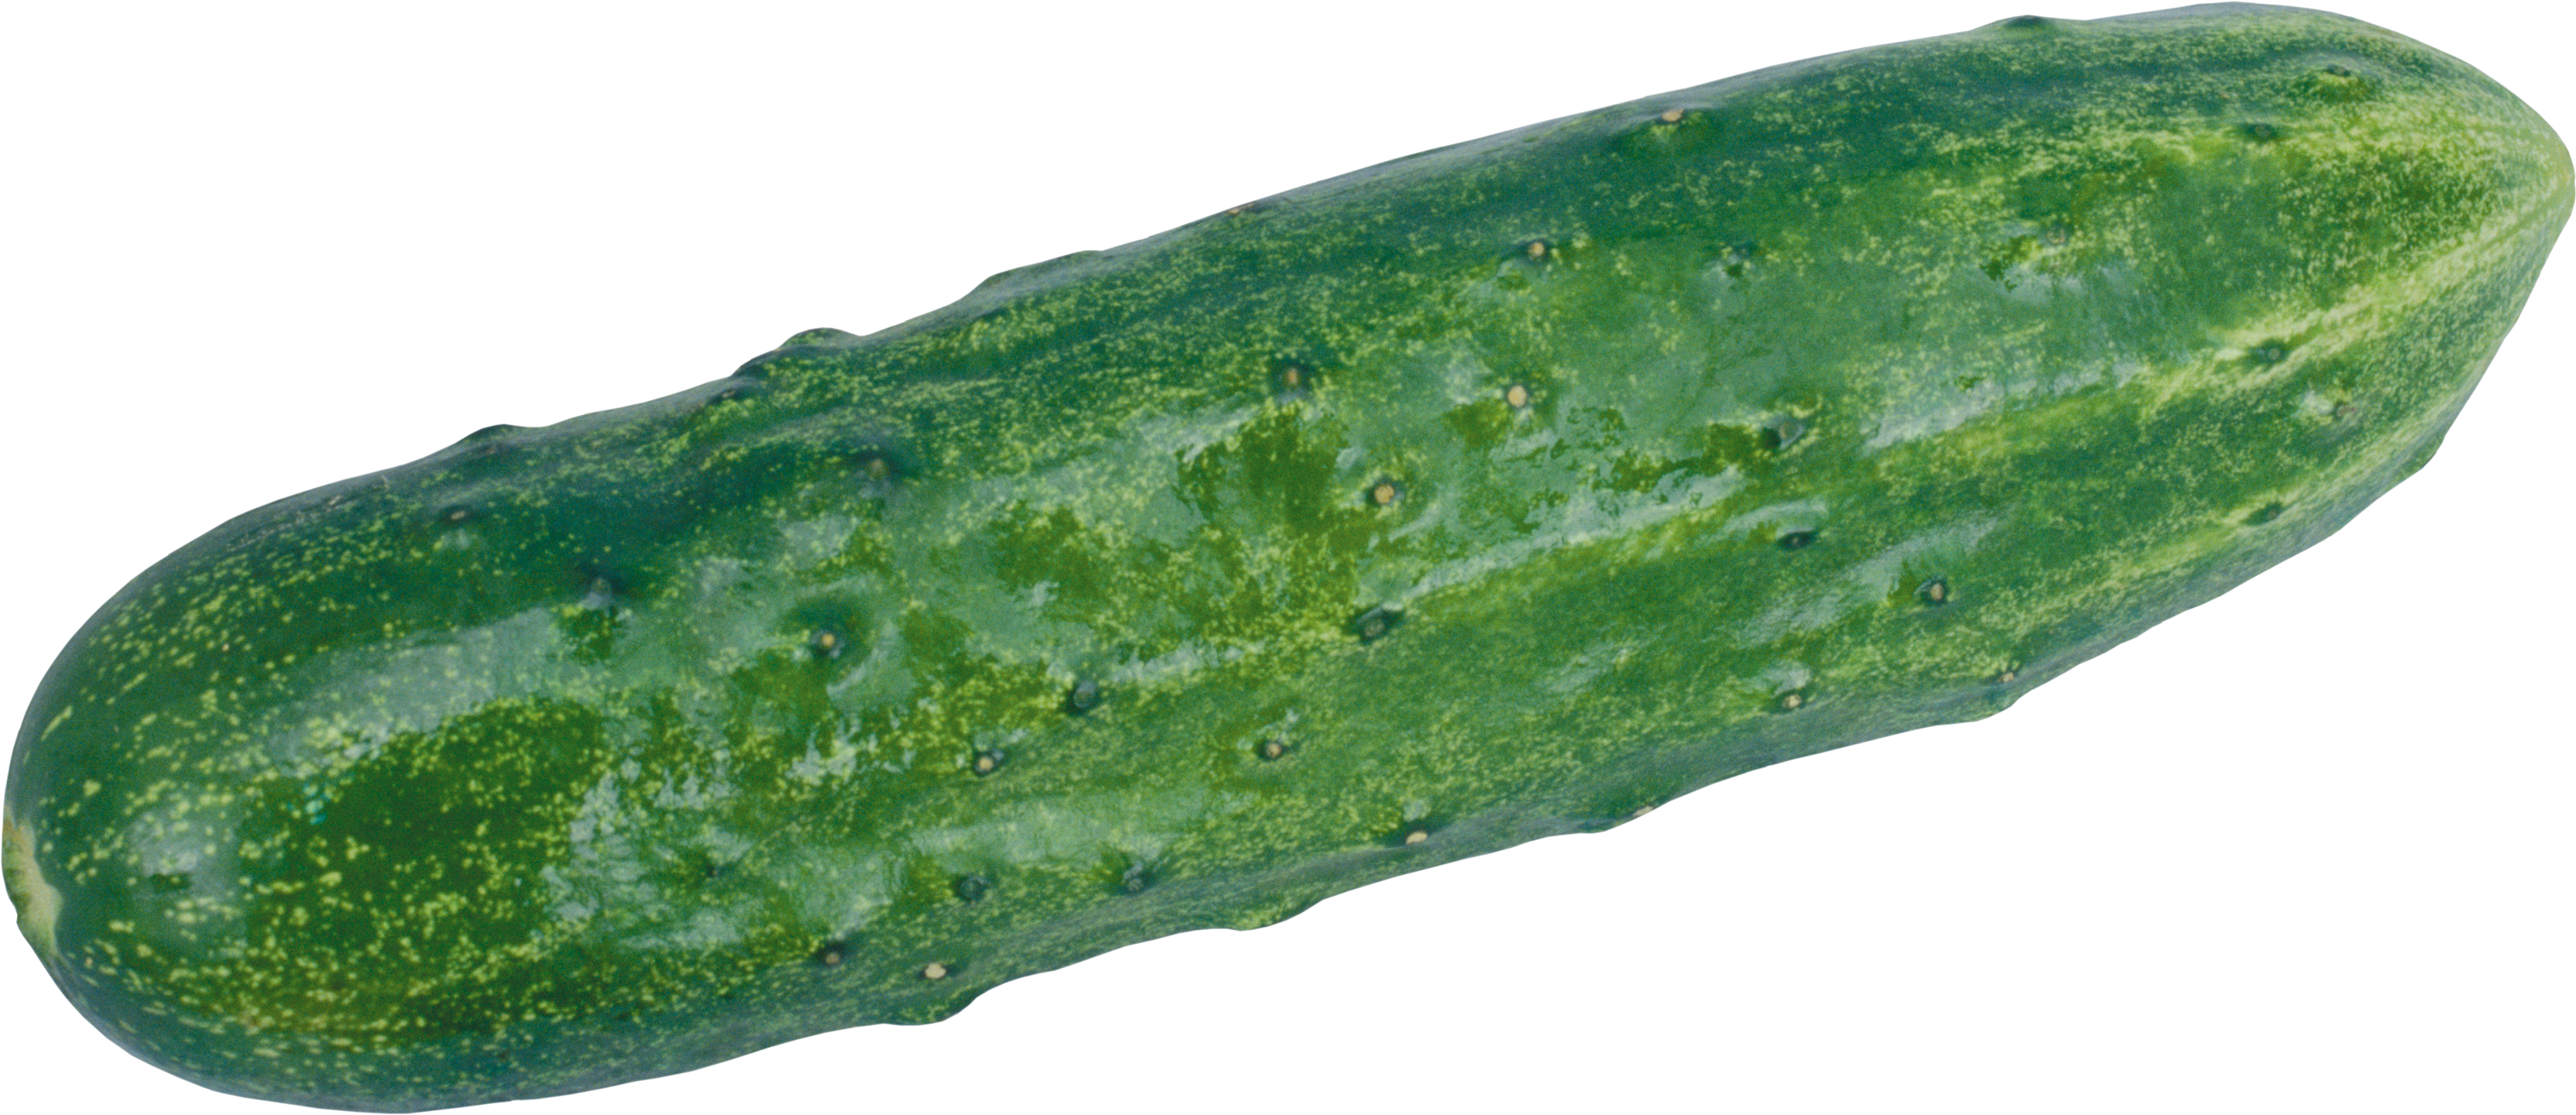 Cucumber png clipart